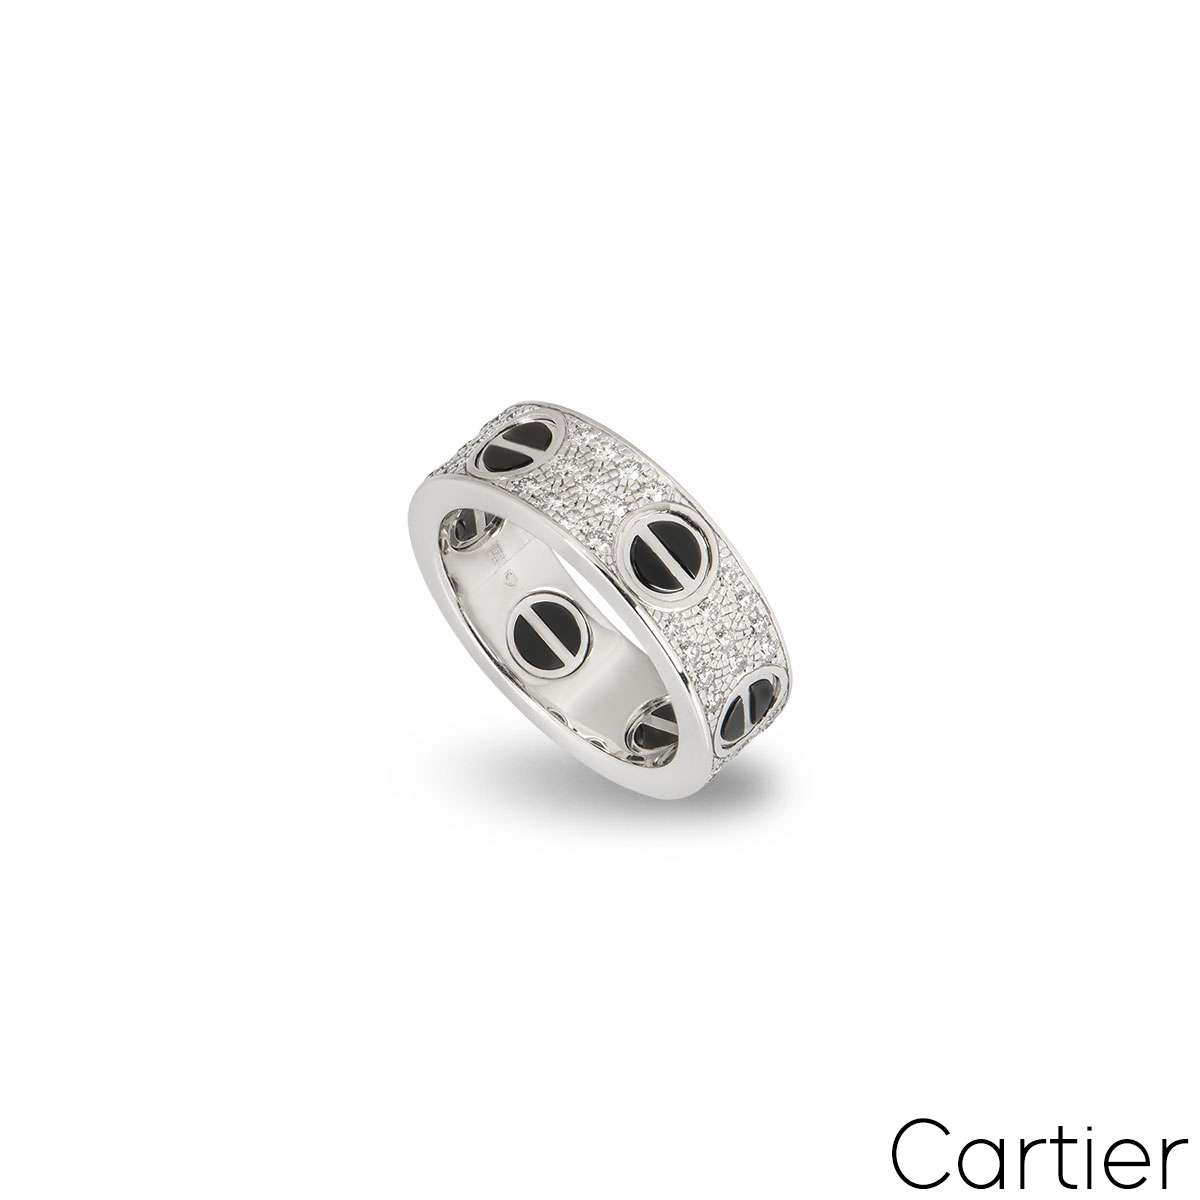 Cartier White Gold Diamond & Ceramic Love Ring Size 53 B4207600